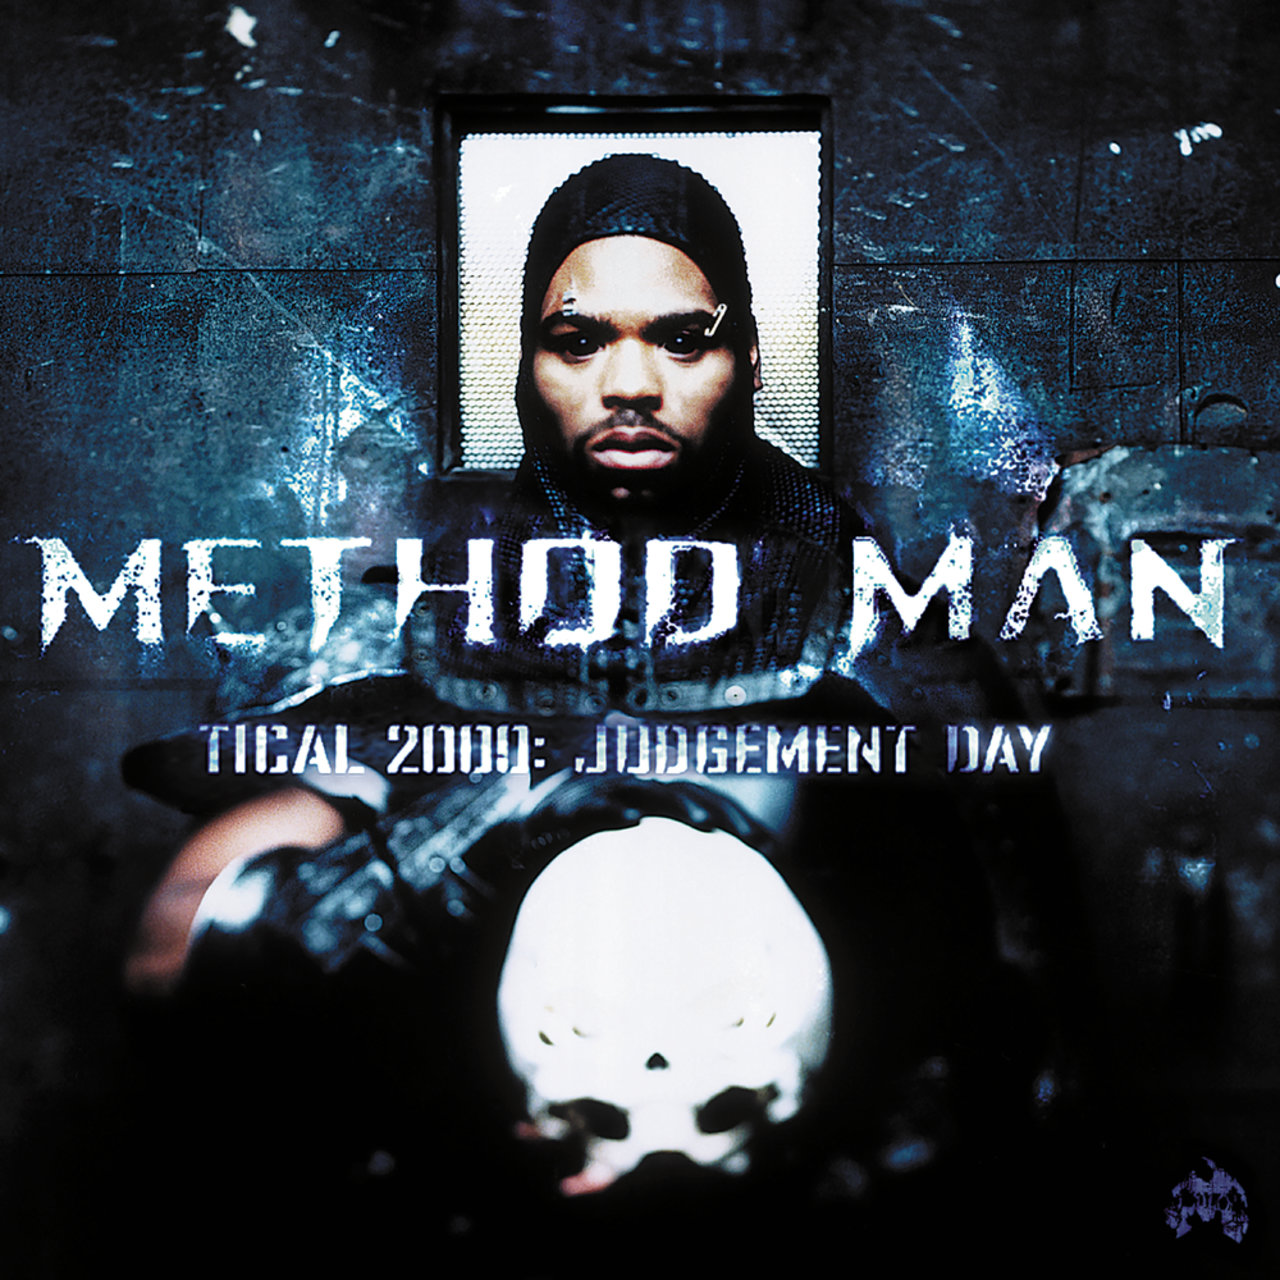 Tical 2000: Judgement Day